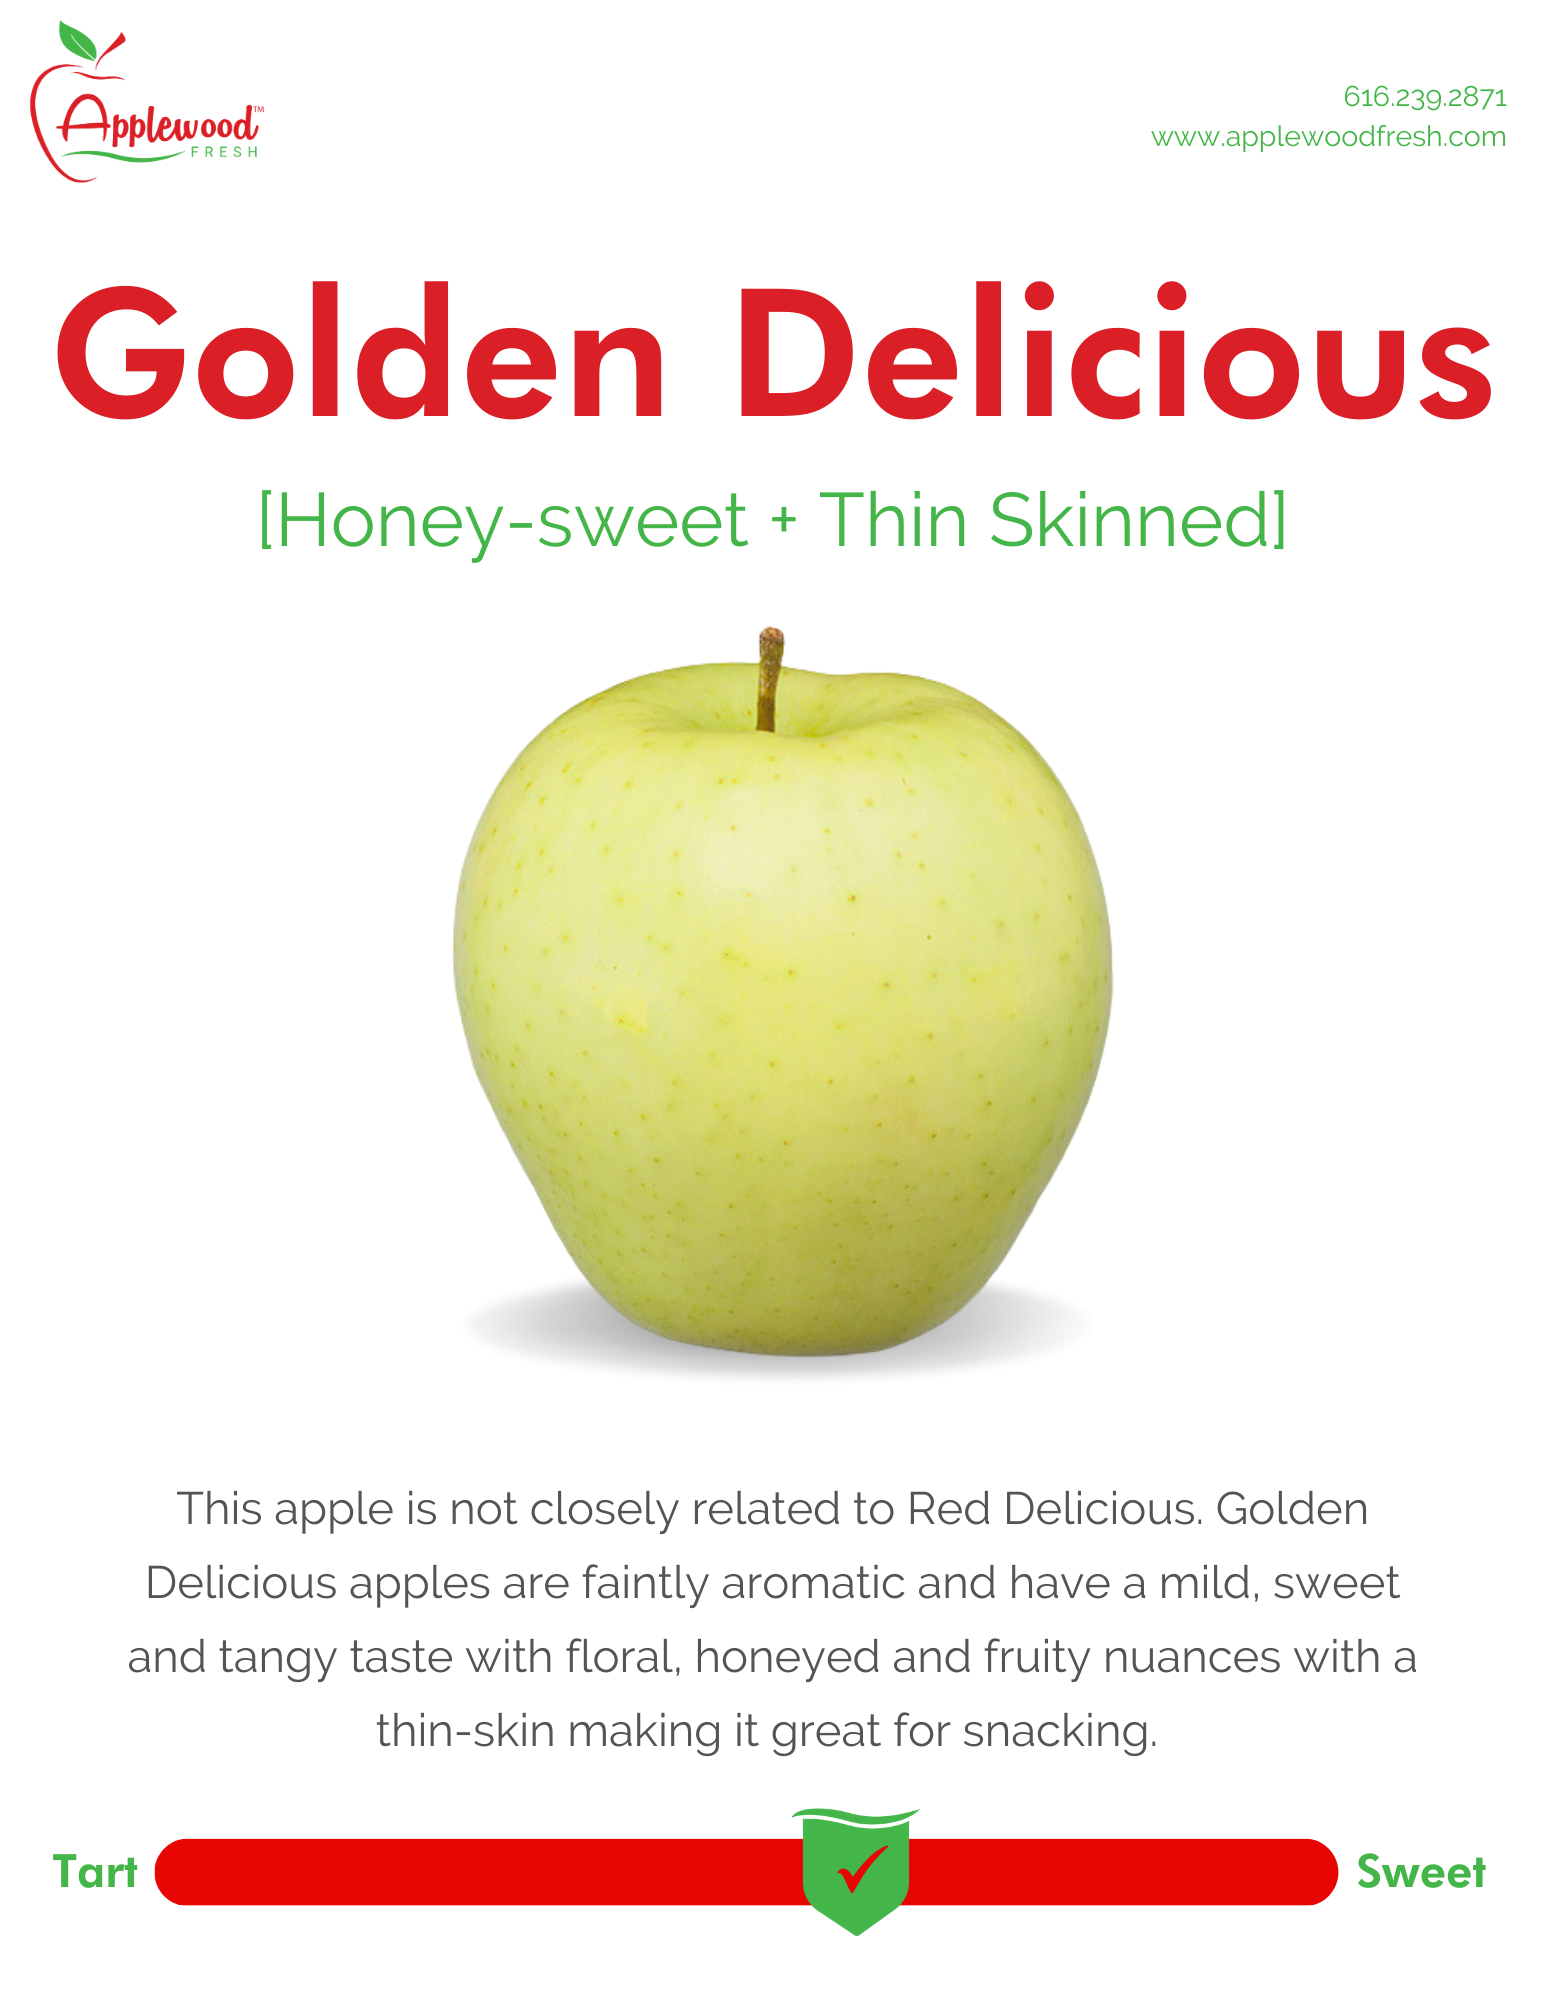 Golden Delicious Apple Information